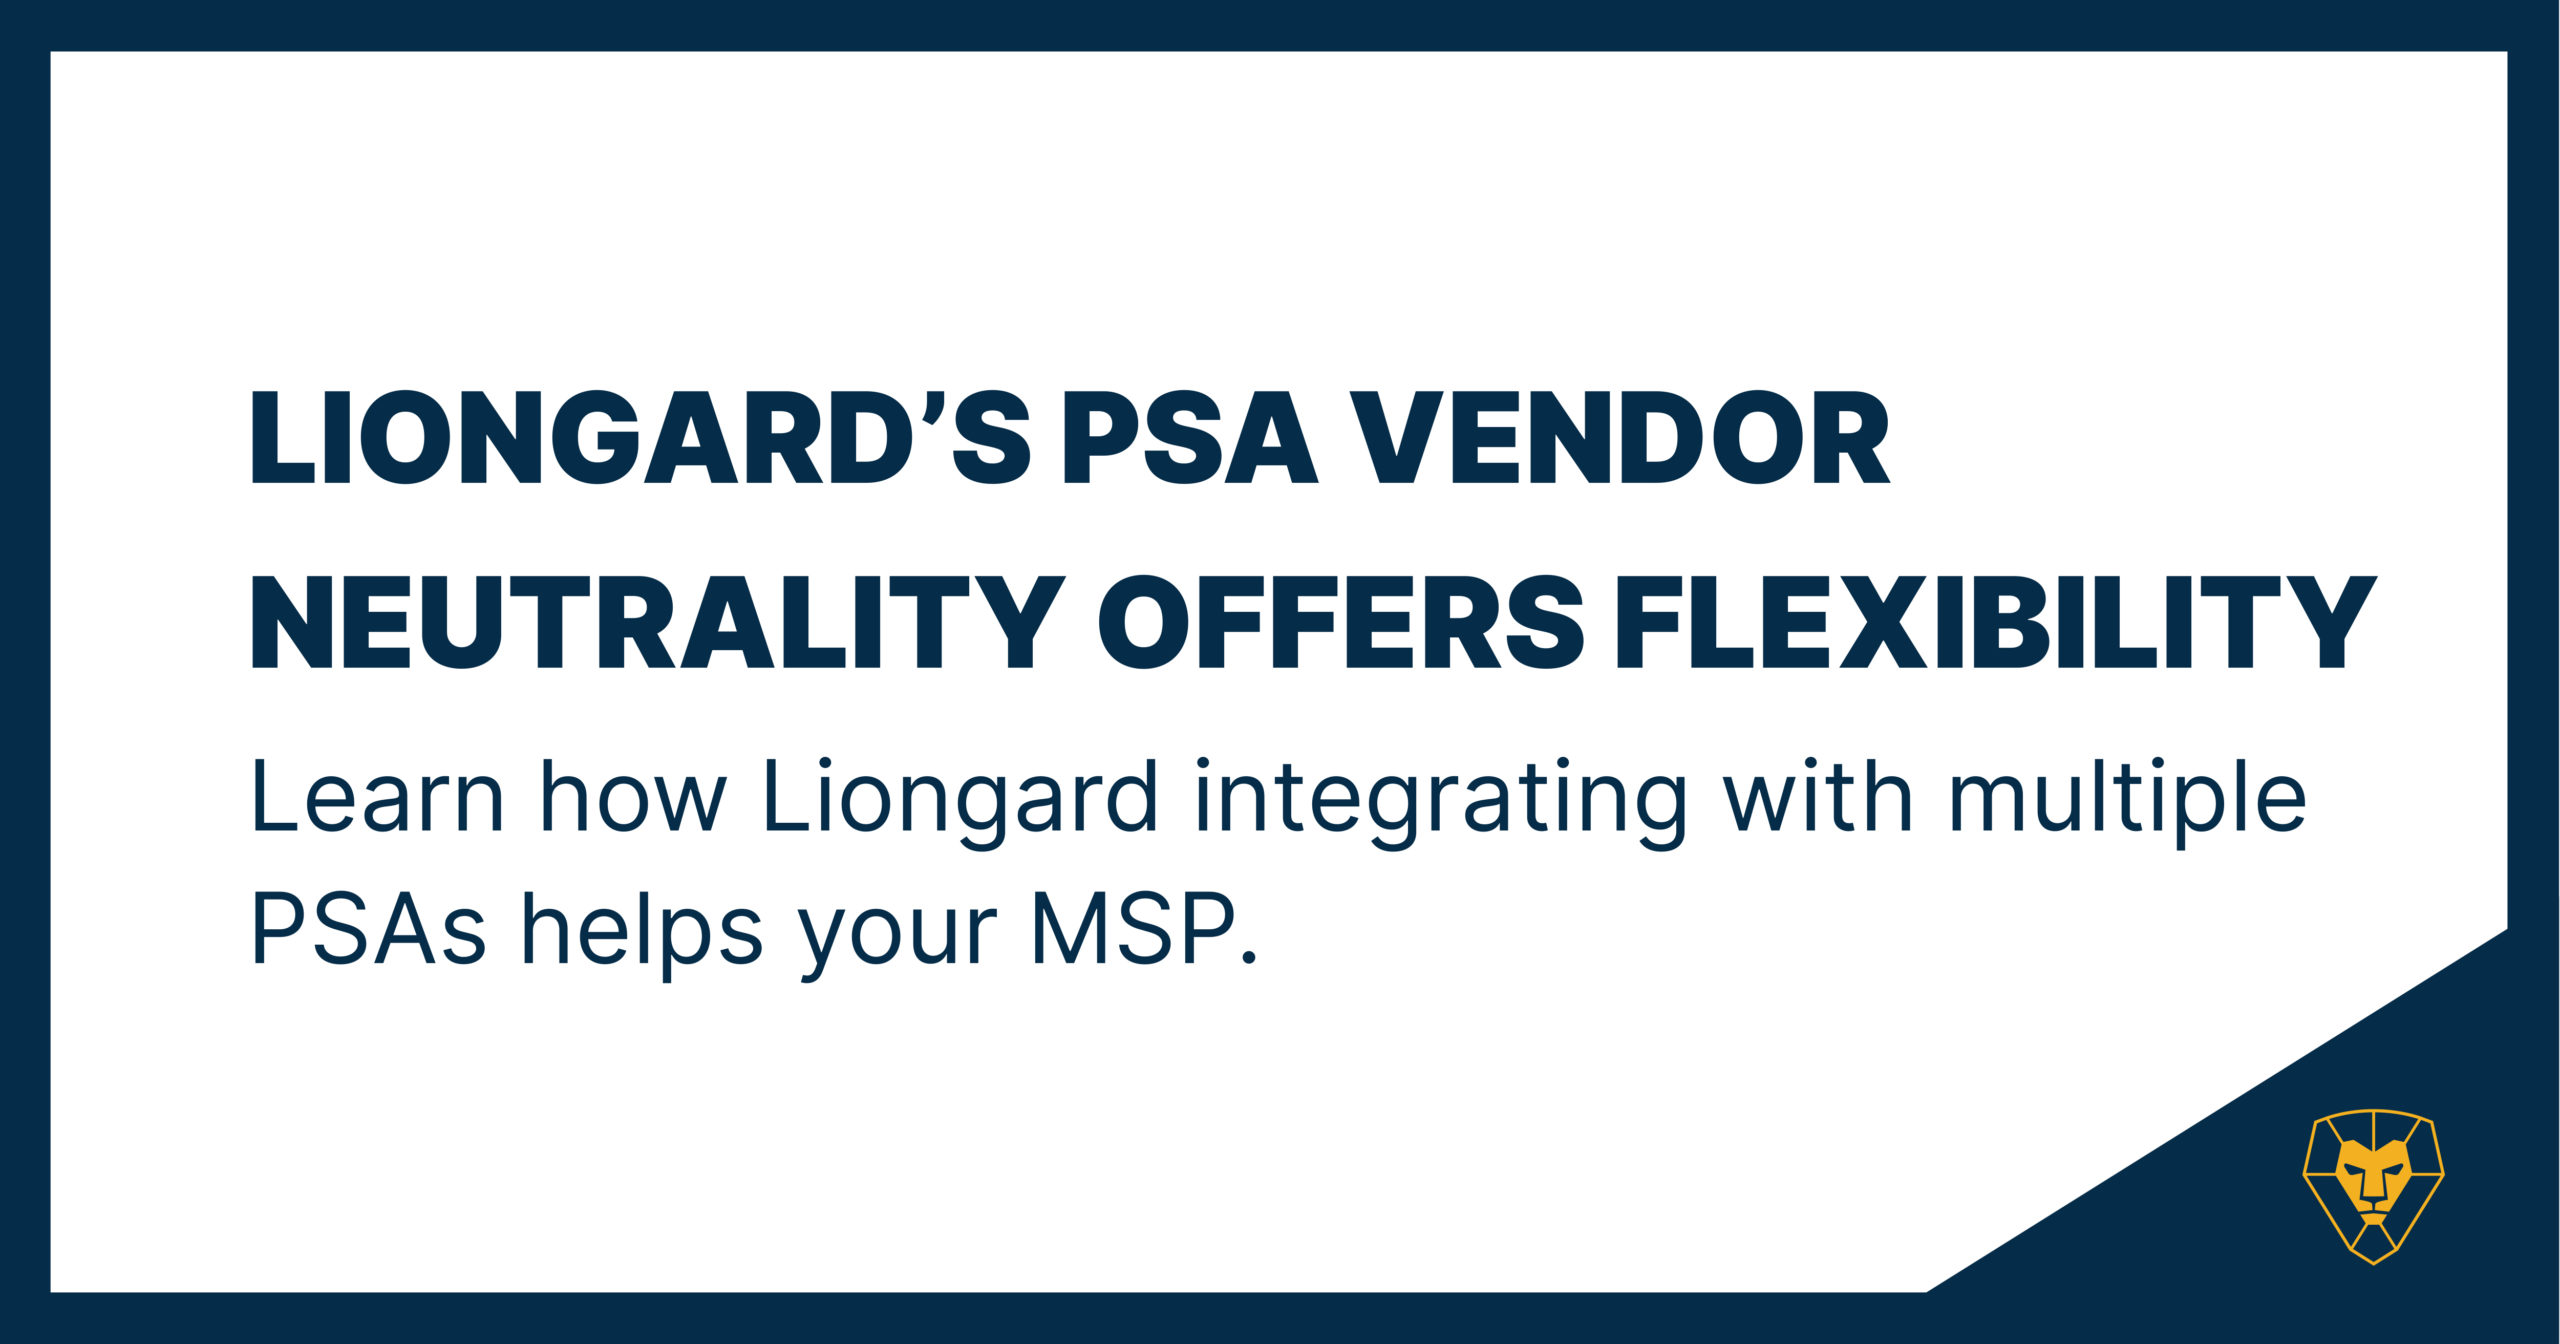 Lingard's PSA Vendor Neutrality Offers Flexibility to MSPs